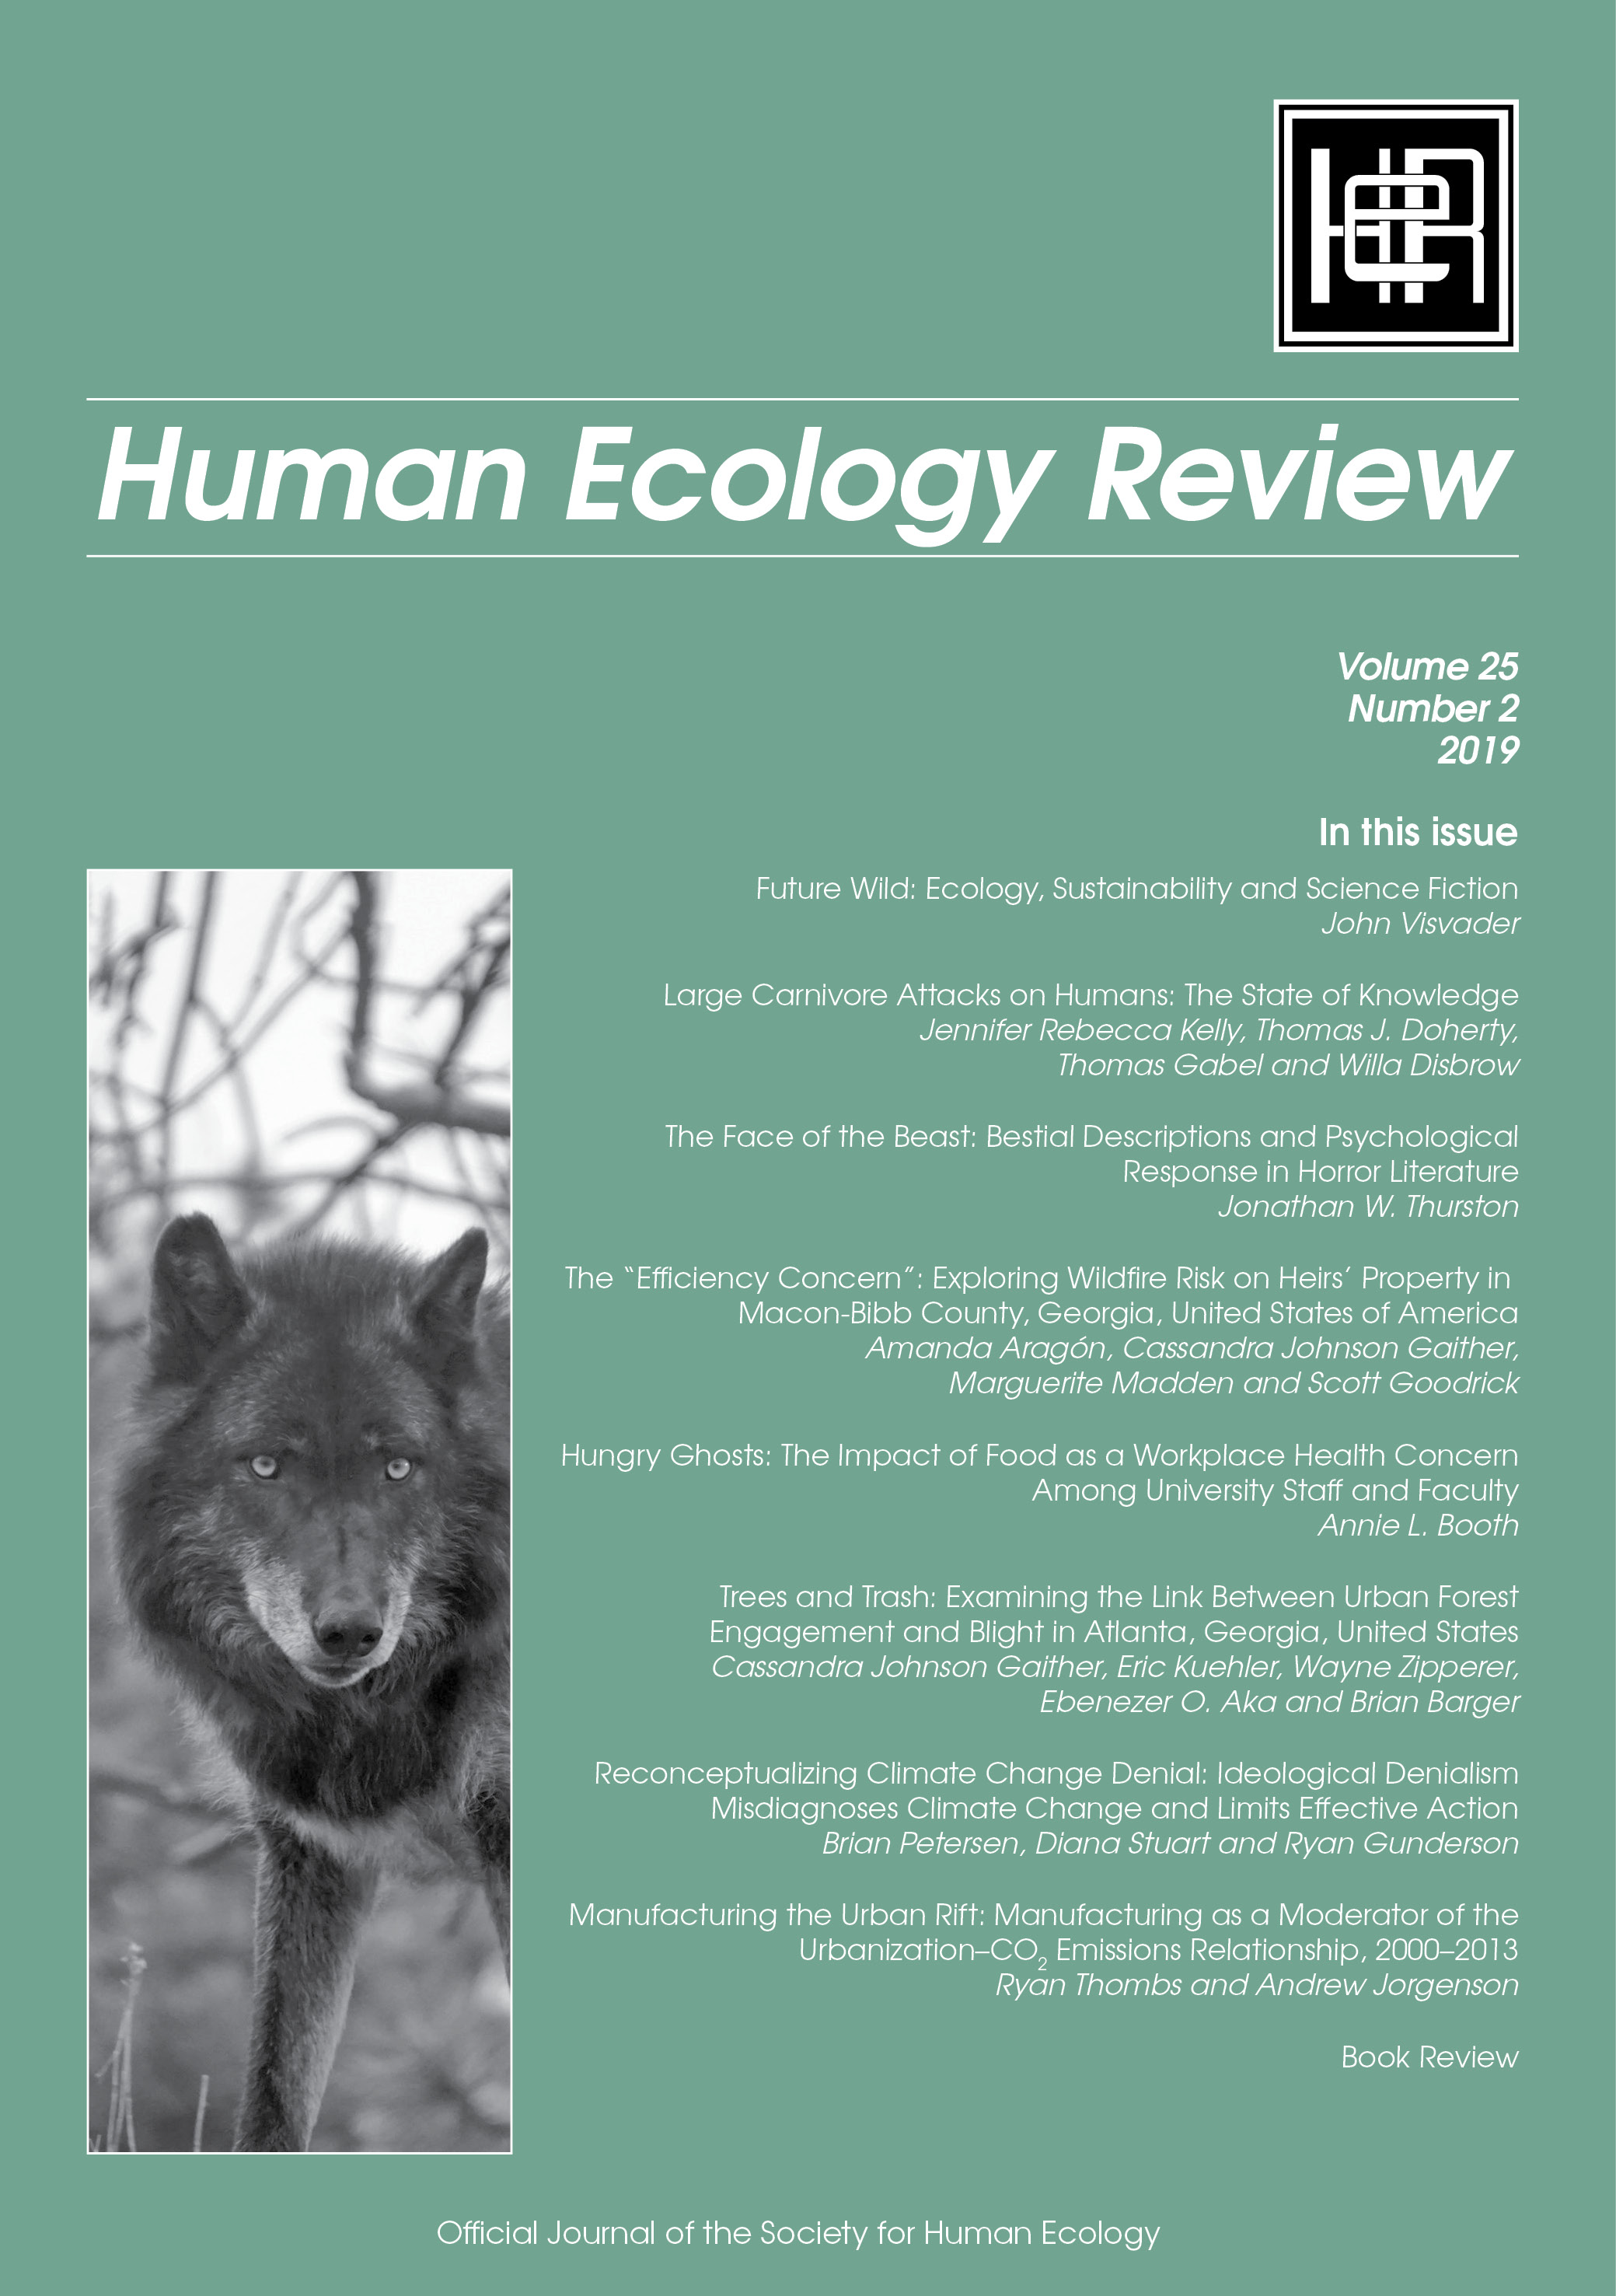 MSU Sociology/ Animal Studies dominate latest HER issue